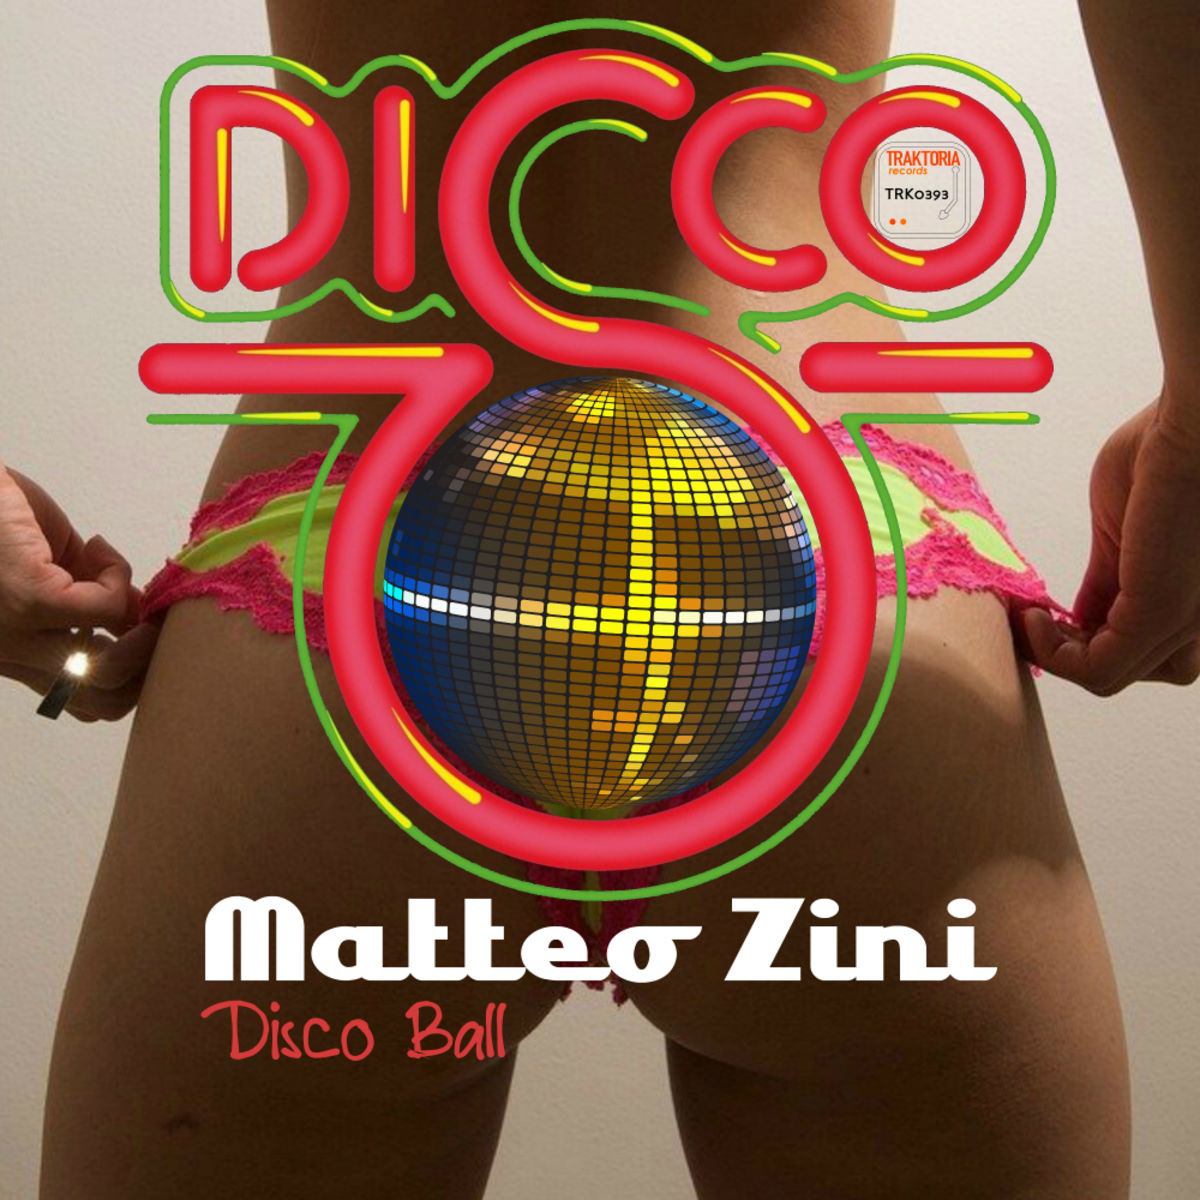 Matteo Zini - Disco Ball / Traktoria